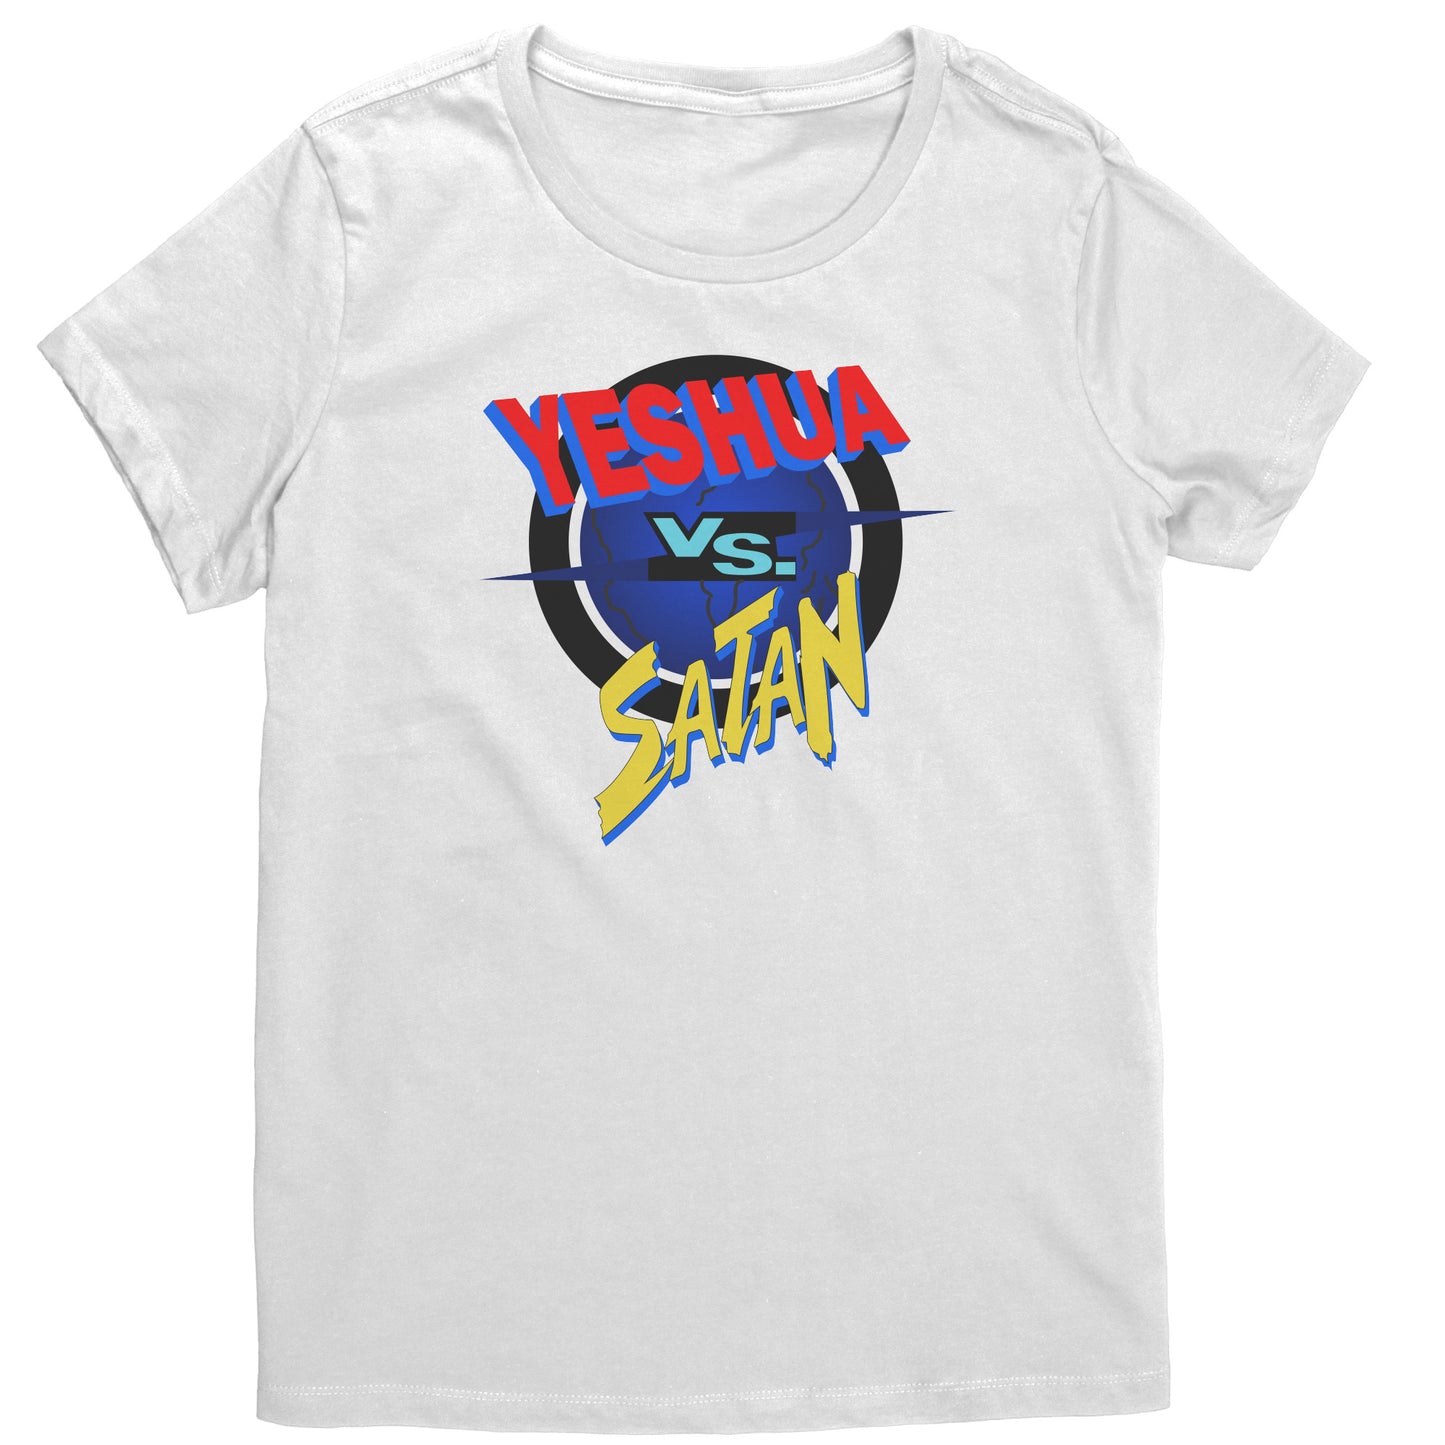 Yeshua vs Satan Women's T-Shirt